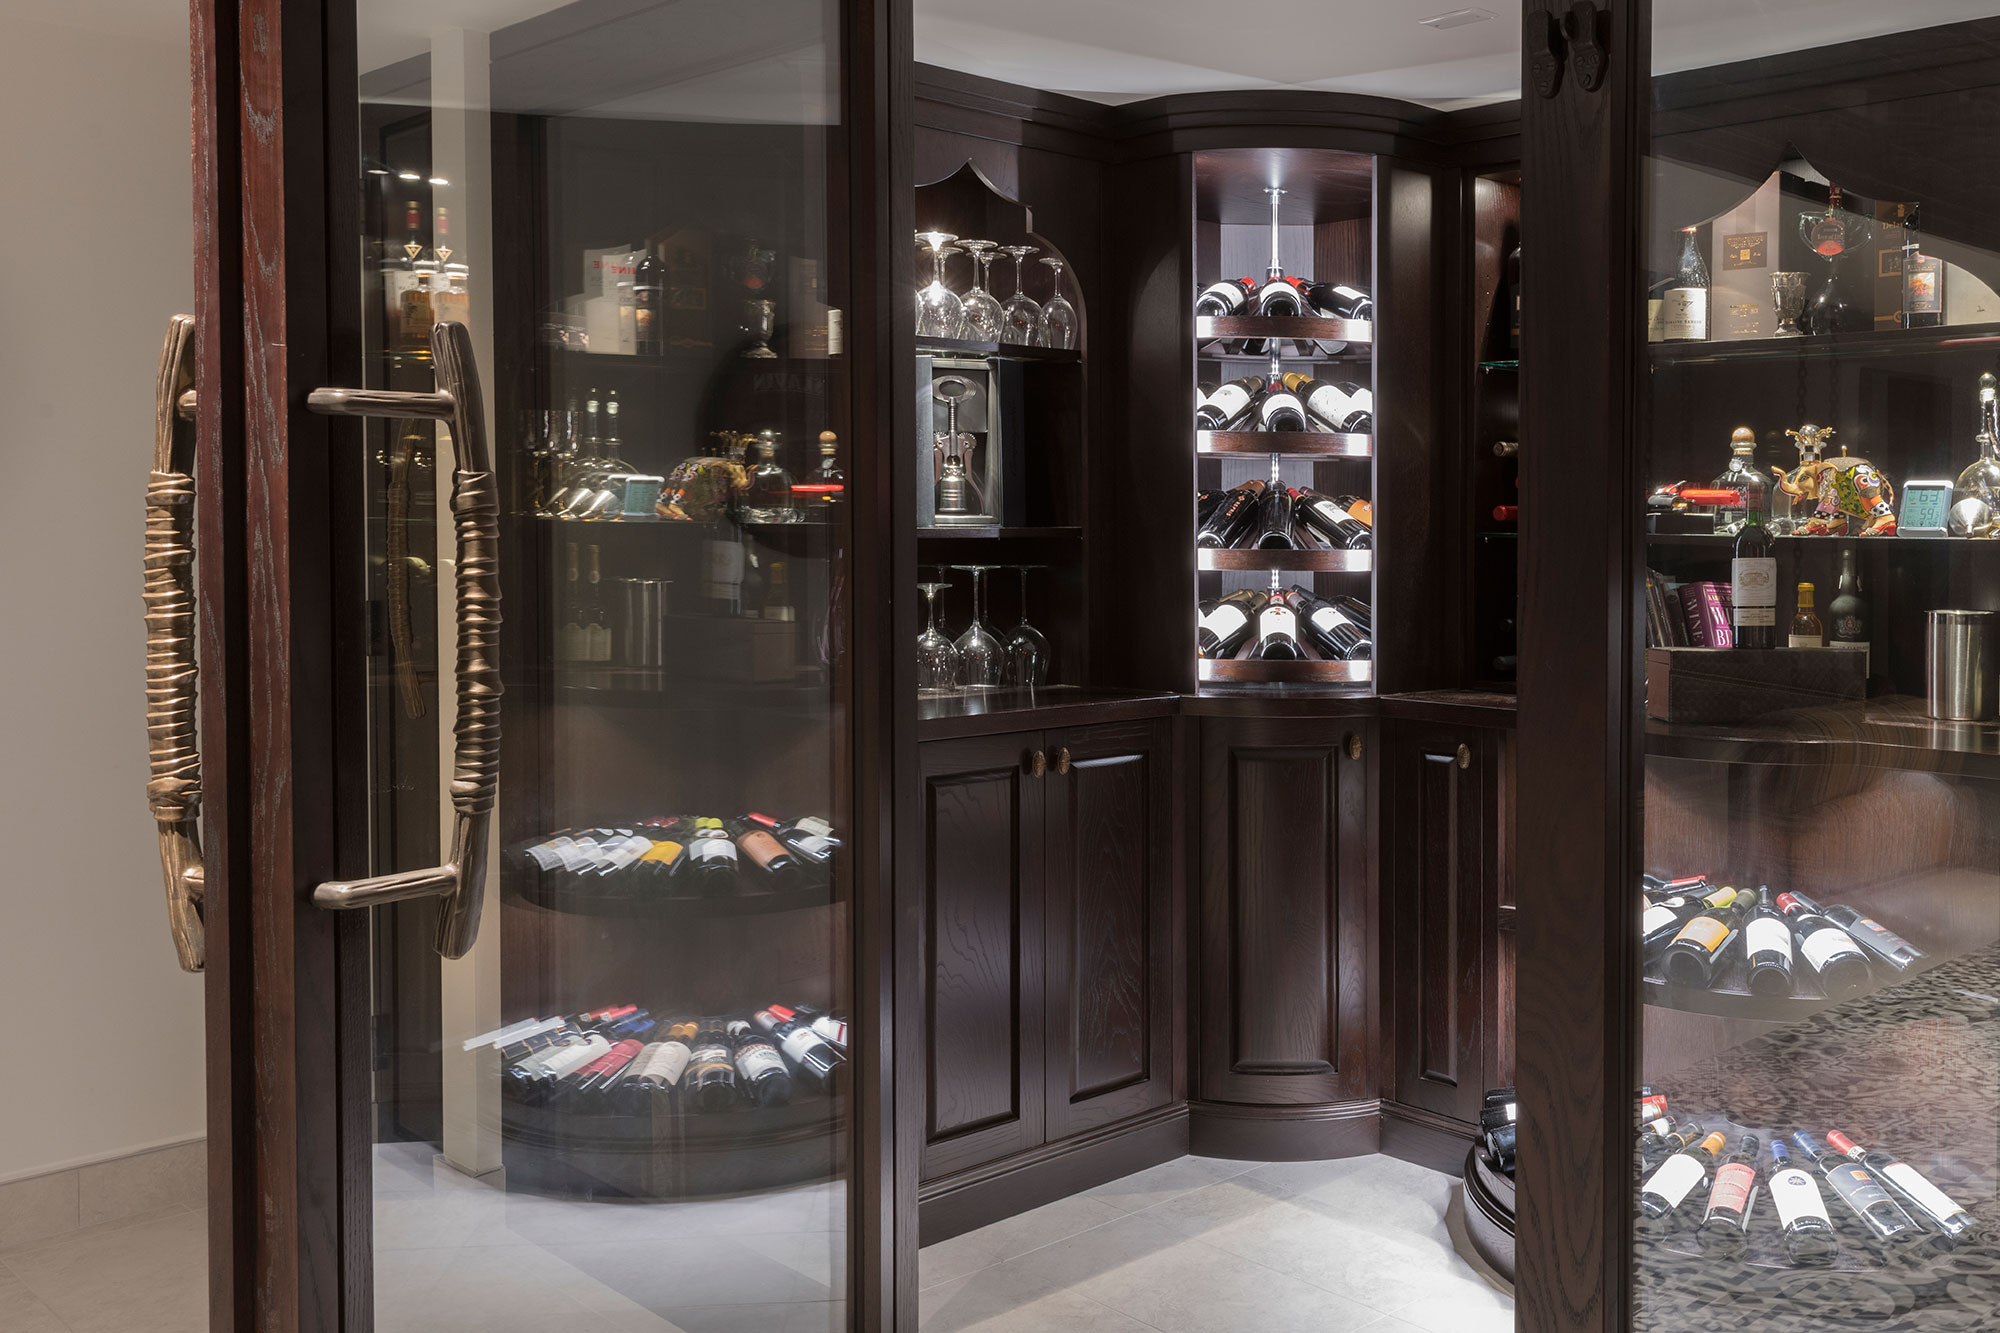 Best ideas about Custom Wine Cellar
. Save or Pin Glenview Haus Chicago Showroom Custom Doors Wine Cellars Now.